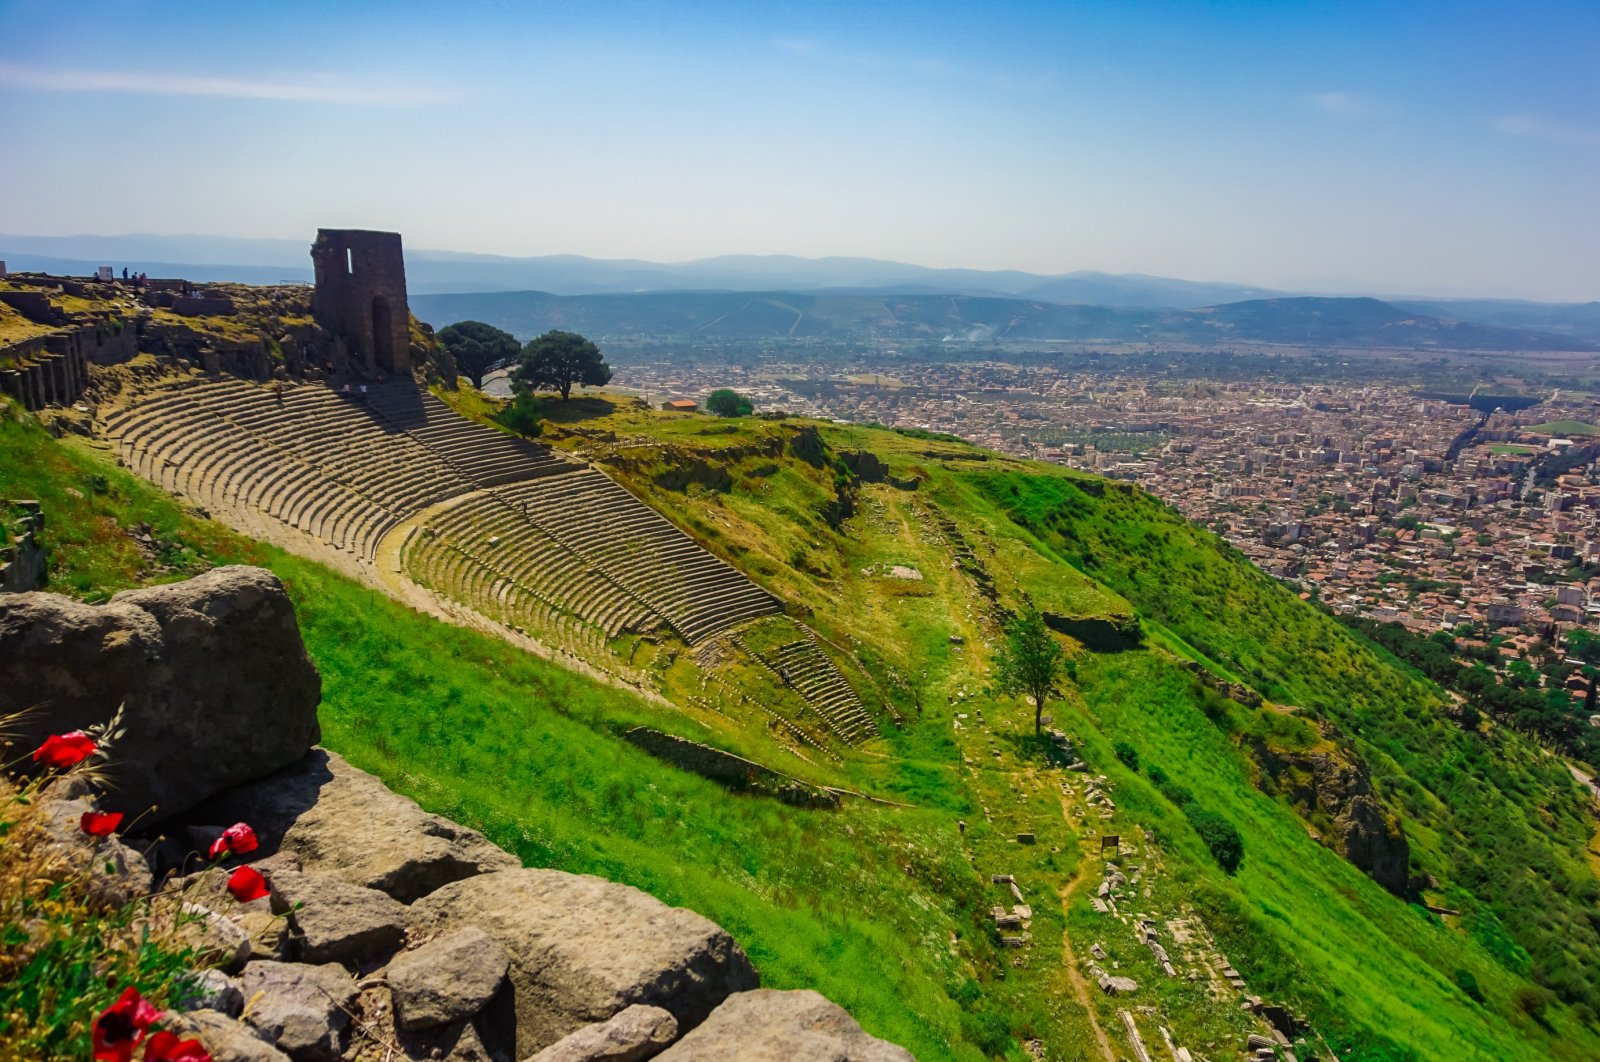 The theater of the ancient city of Pergamon overlooks the city landscape. (iStock Photo / Servet Turan)